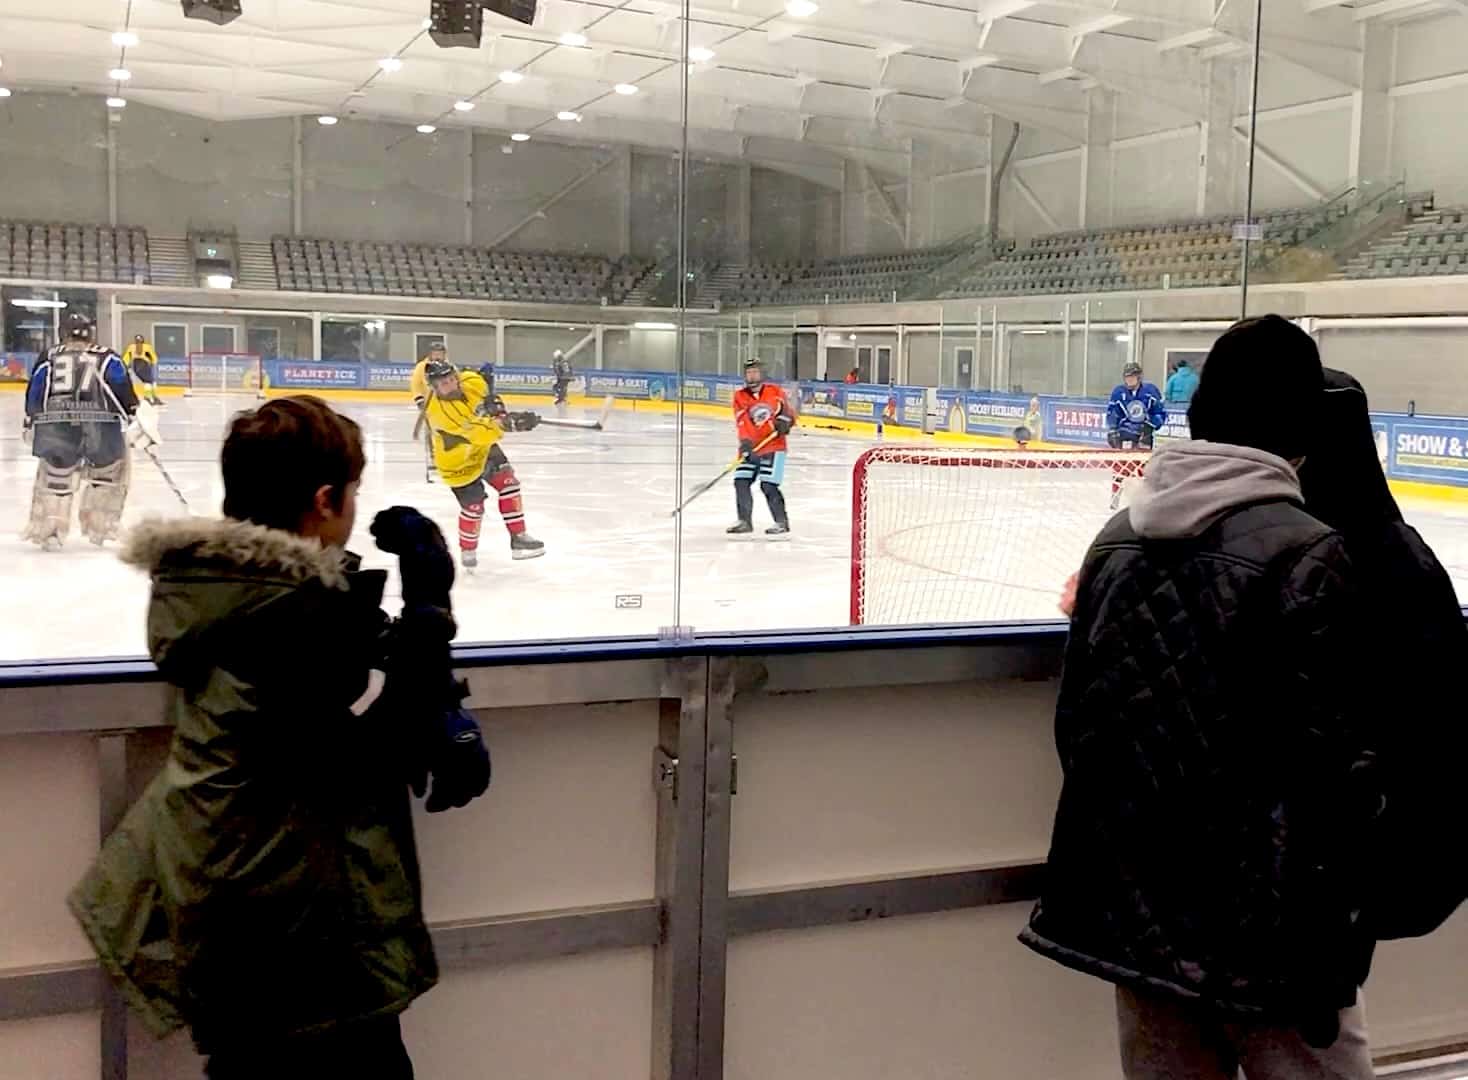 Spectators watching ice hockey practice at Bristol's Planet Ice, home of the Bristol Pitbulls team.